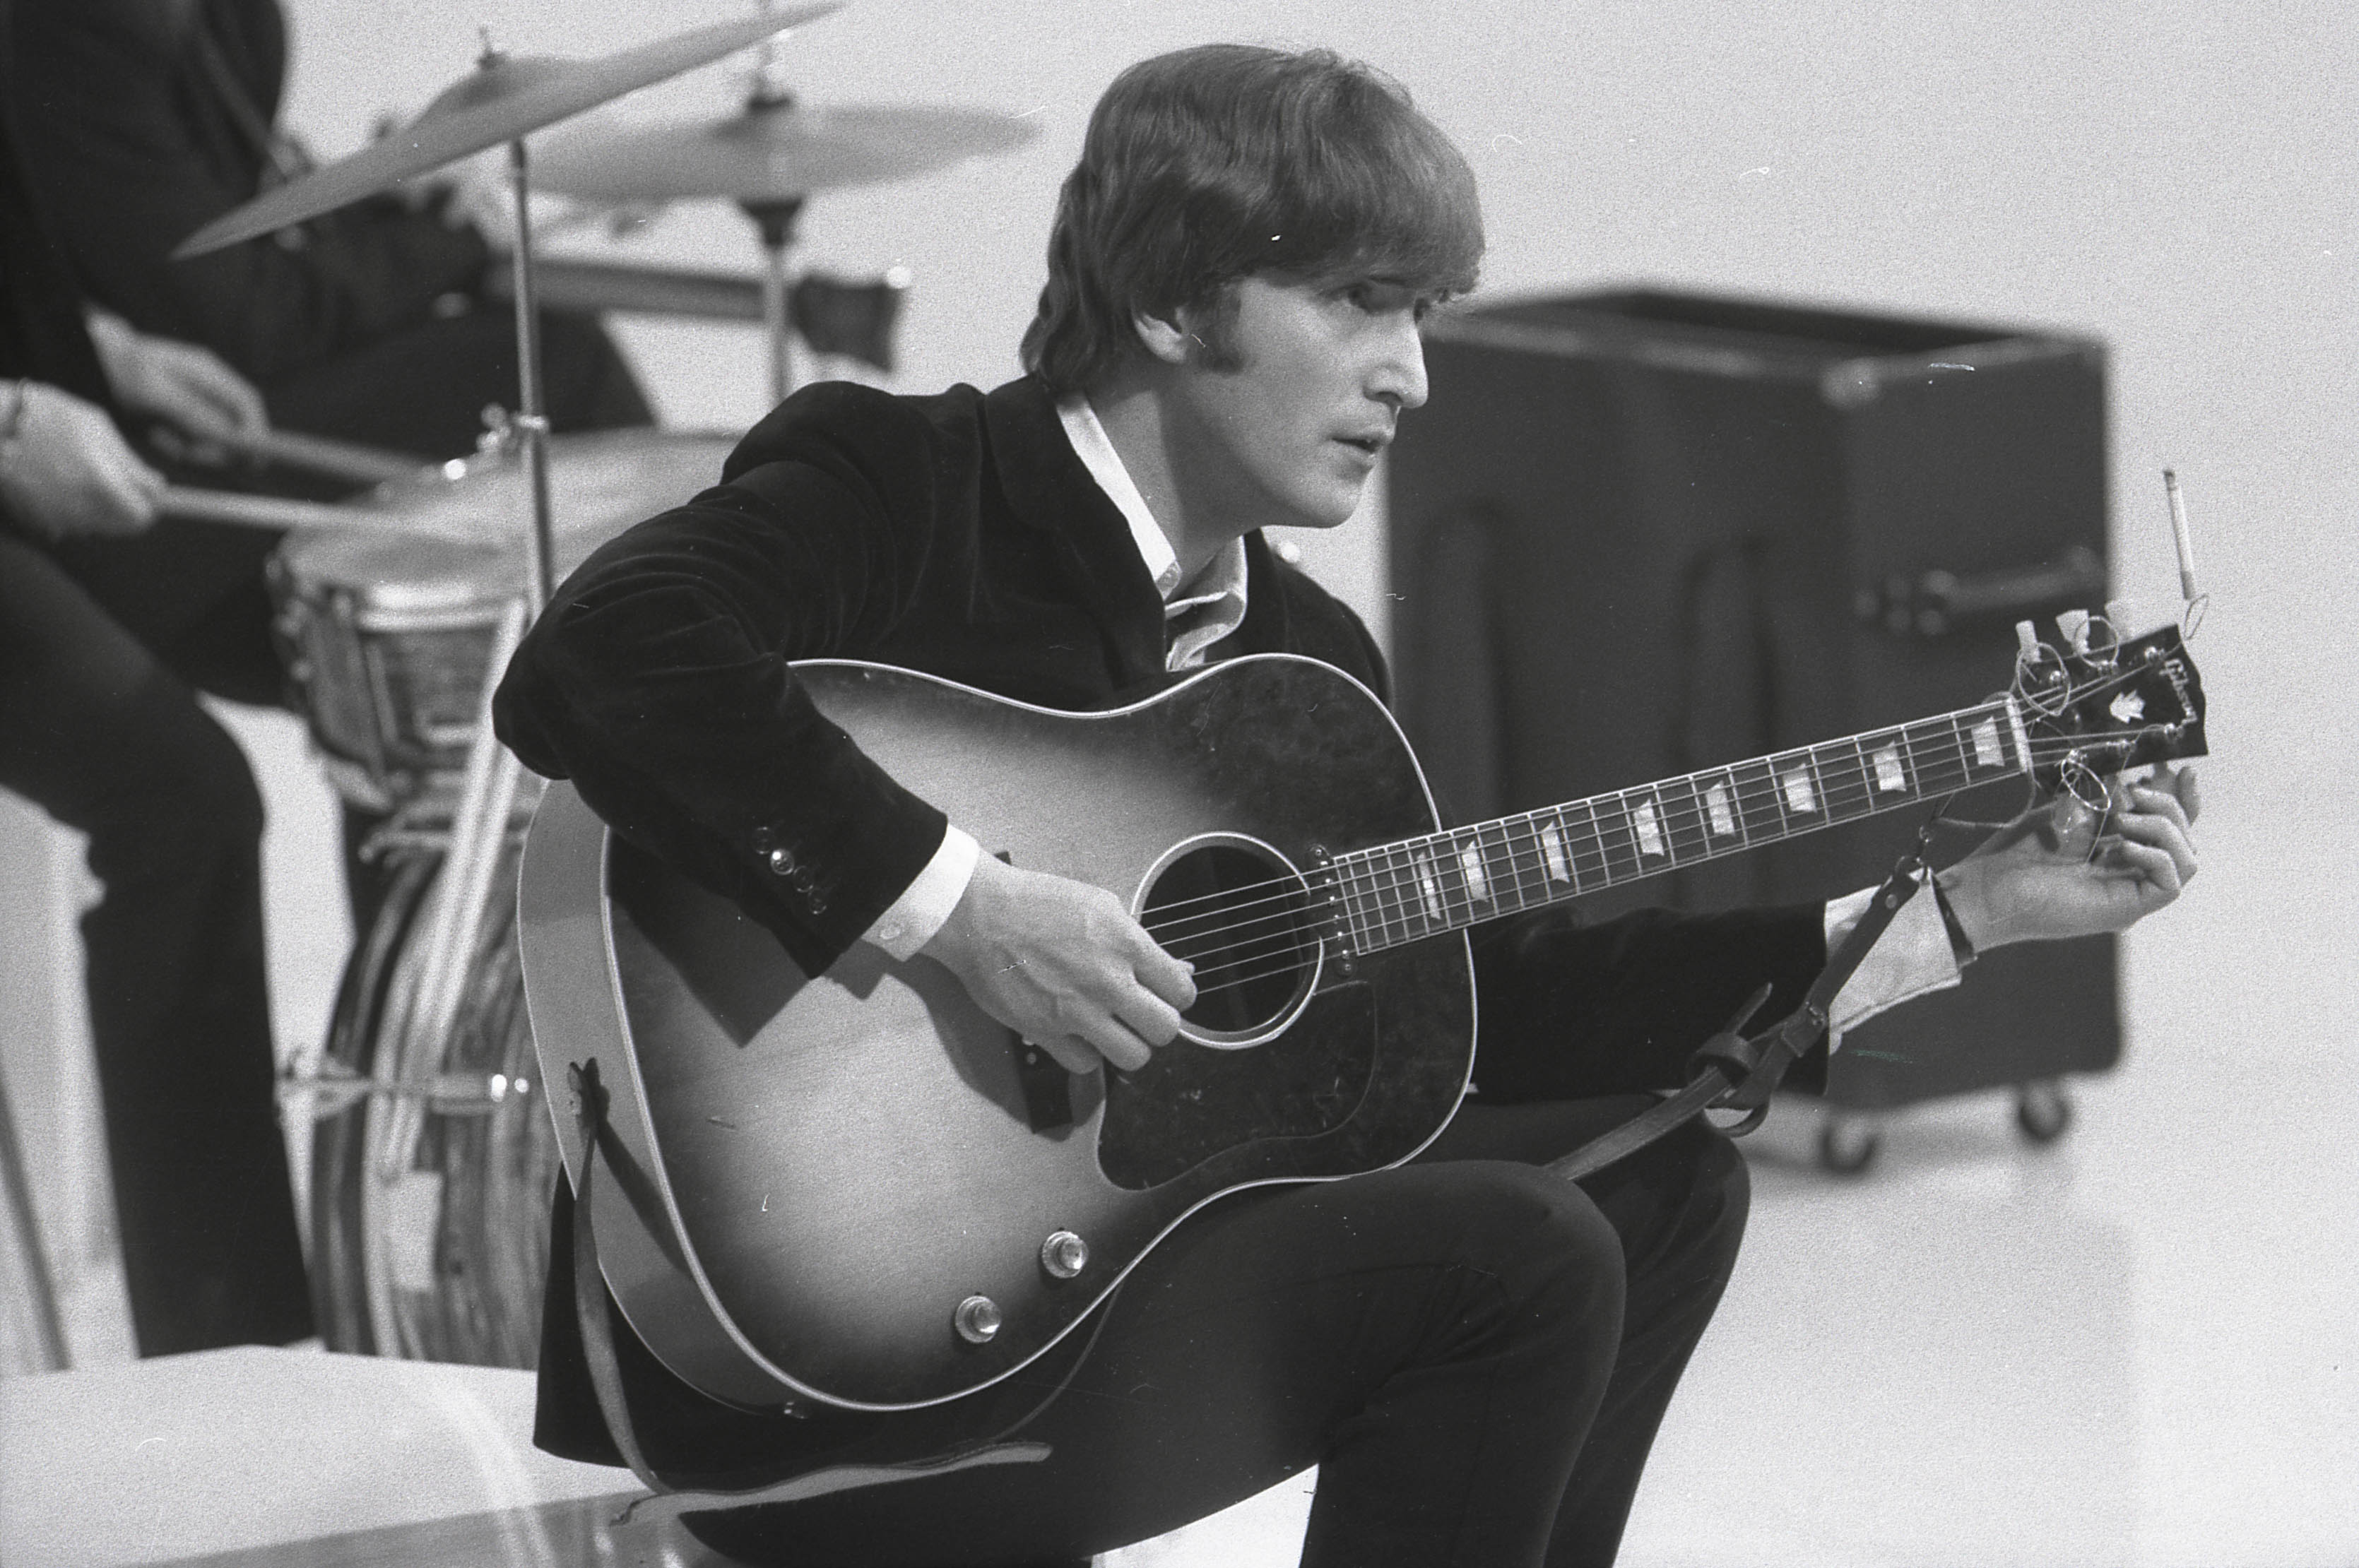 The Beatles' John Lennon wearing a suit